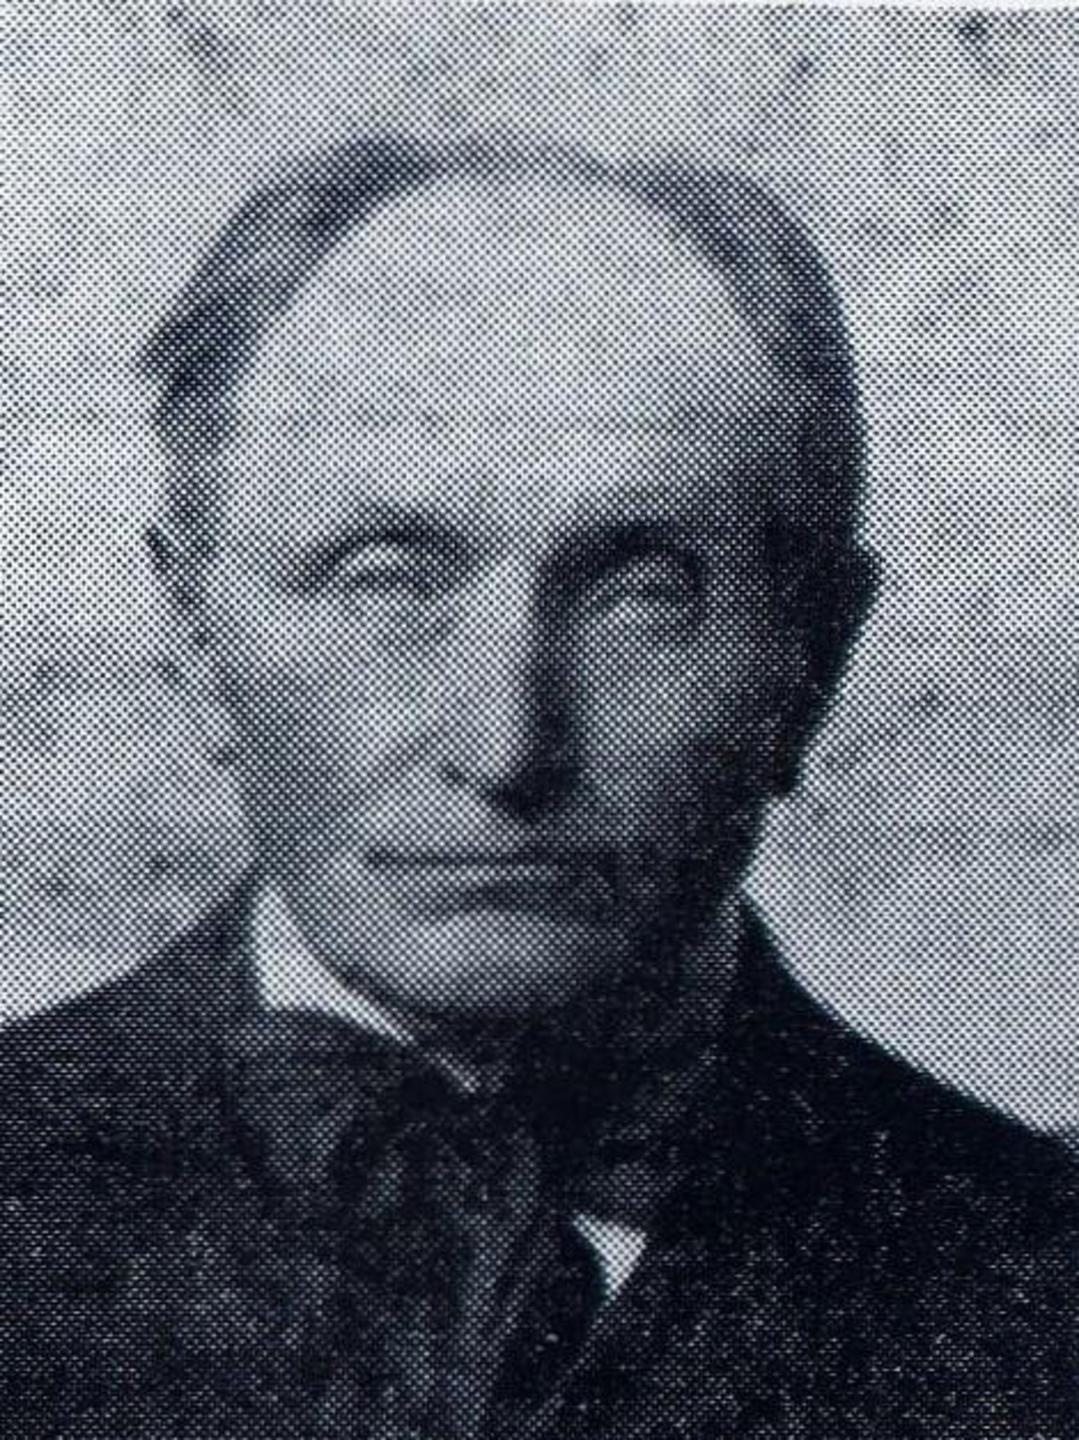 Christian Jensenius Nicholas Beck (1822 - 1899) Profile